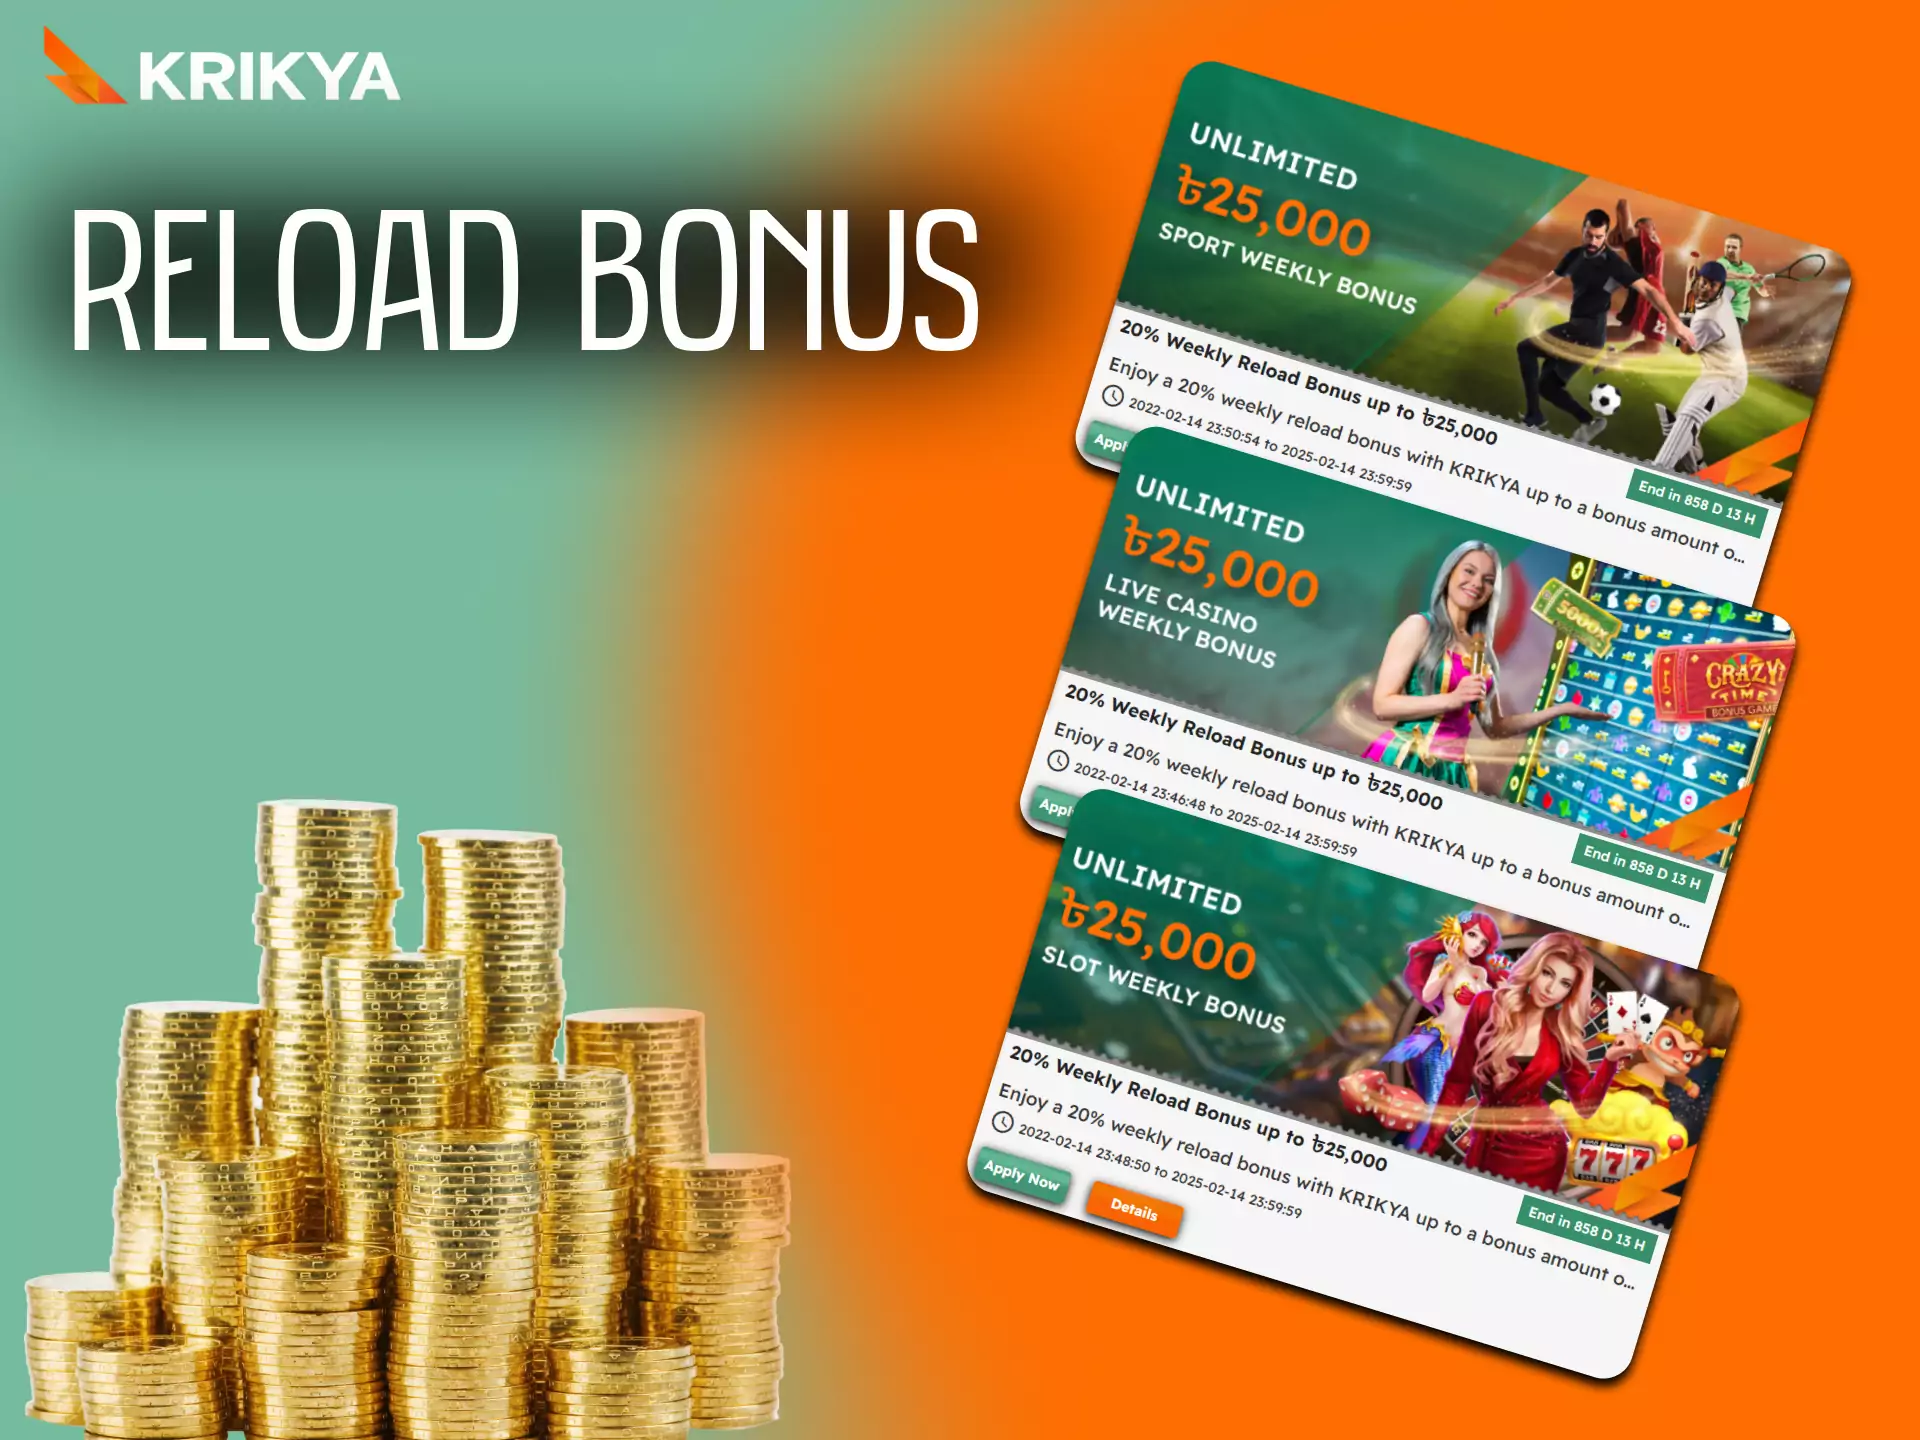 In Krikya, get a special reload bonus.